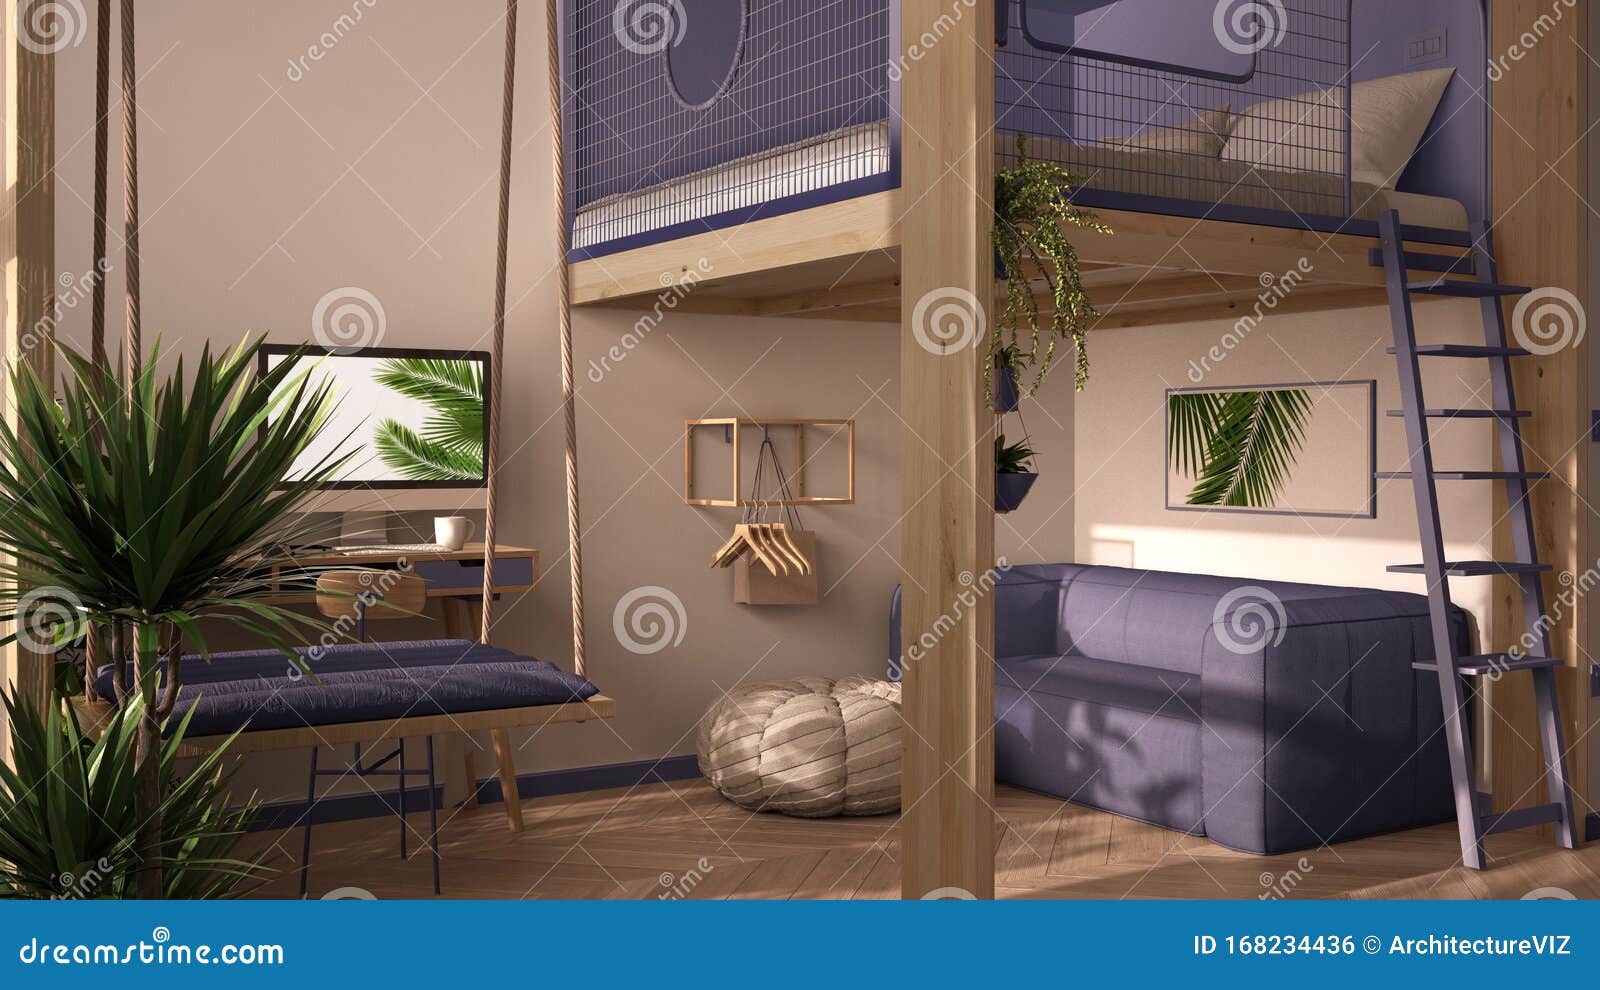 Minimalist Studio Apartment With Loft Bunk Double Bed Mezzanine